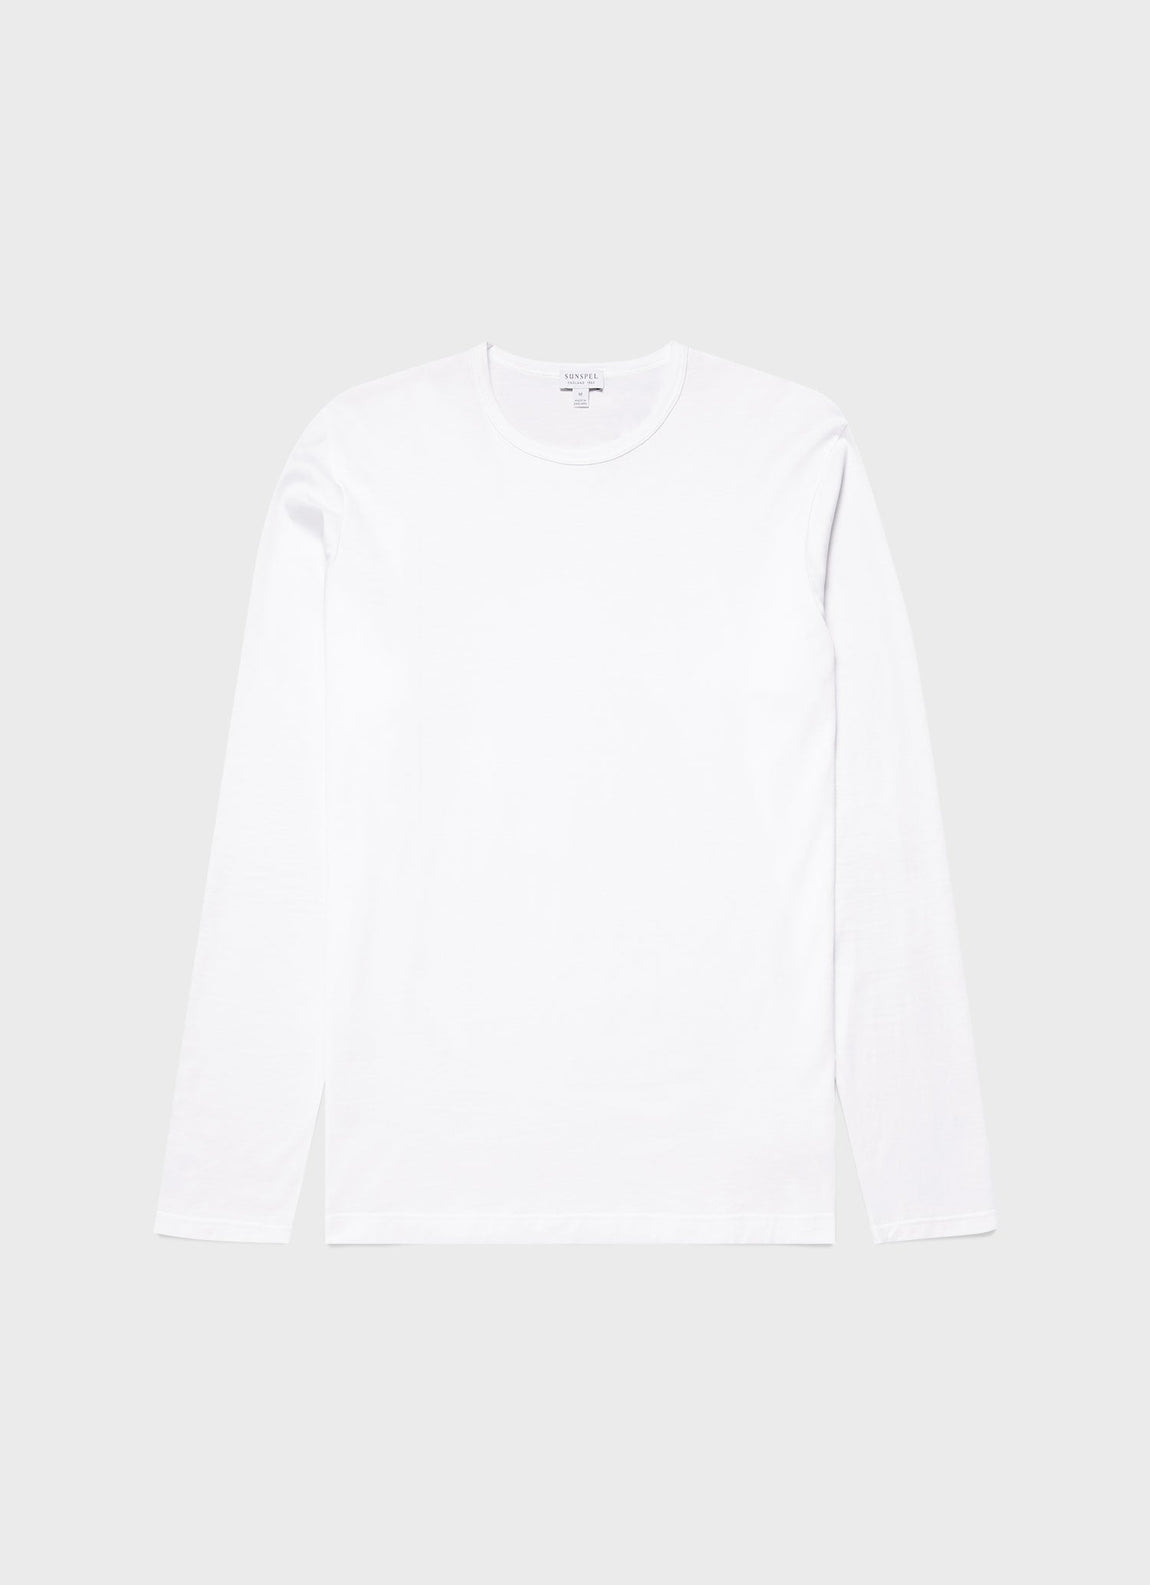 Men's Long Sleeve T-Shirt - Original Use™ White M